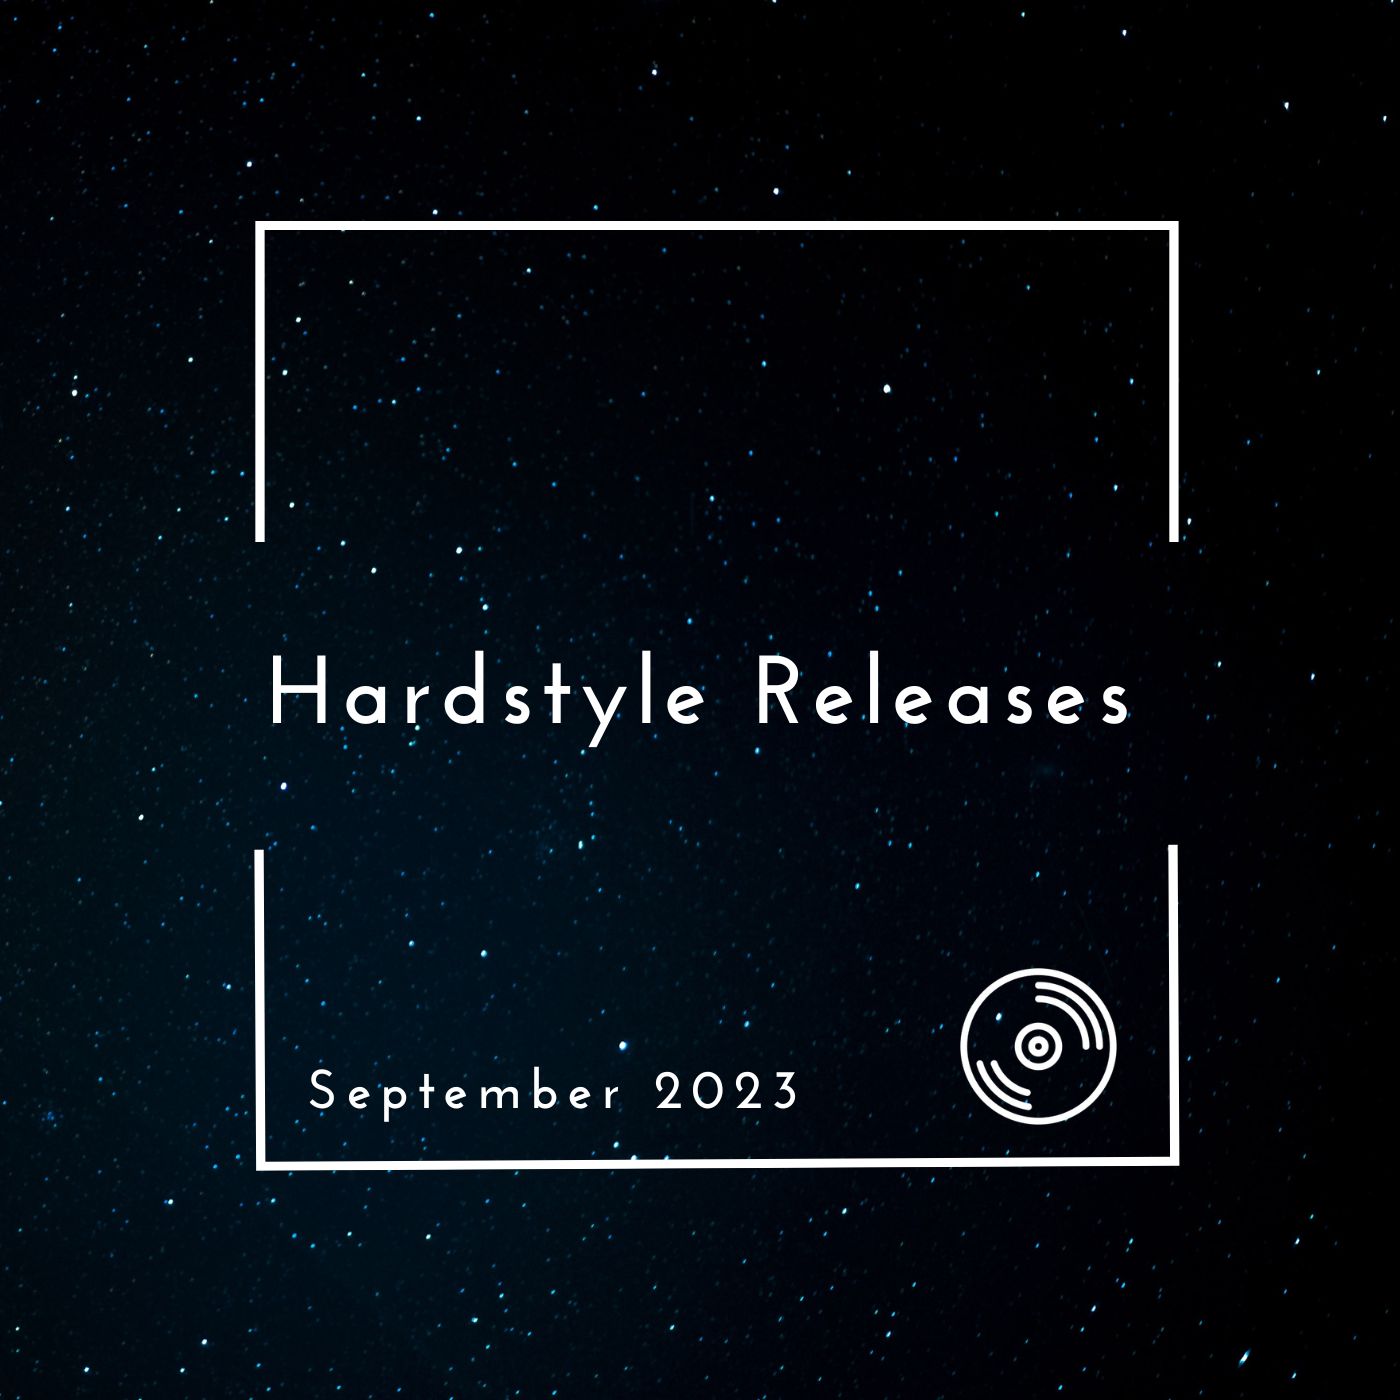 Hardstyle Releases September 2023